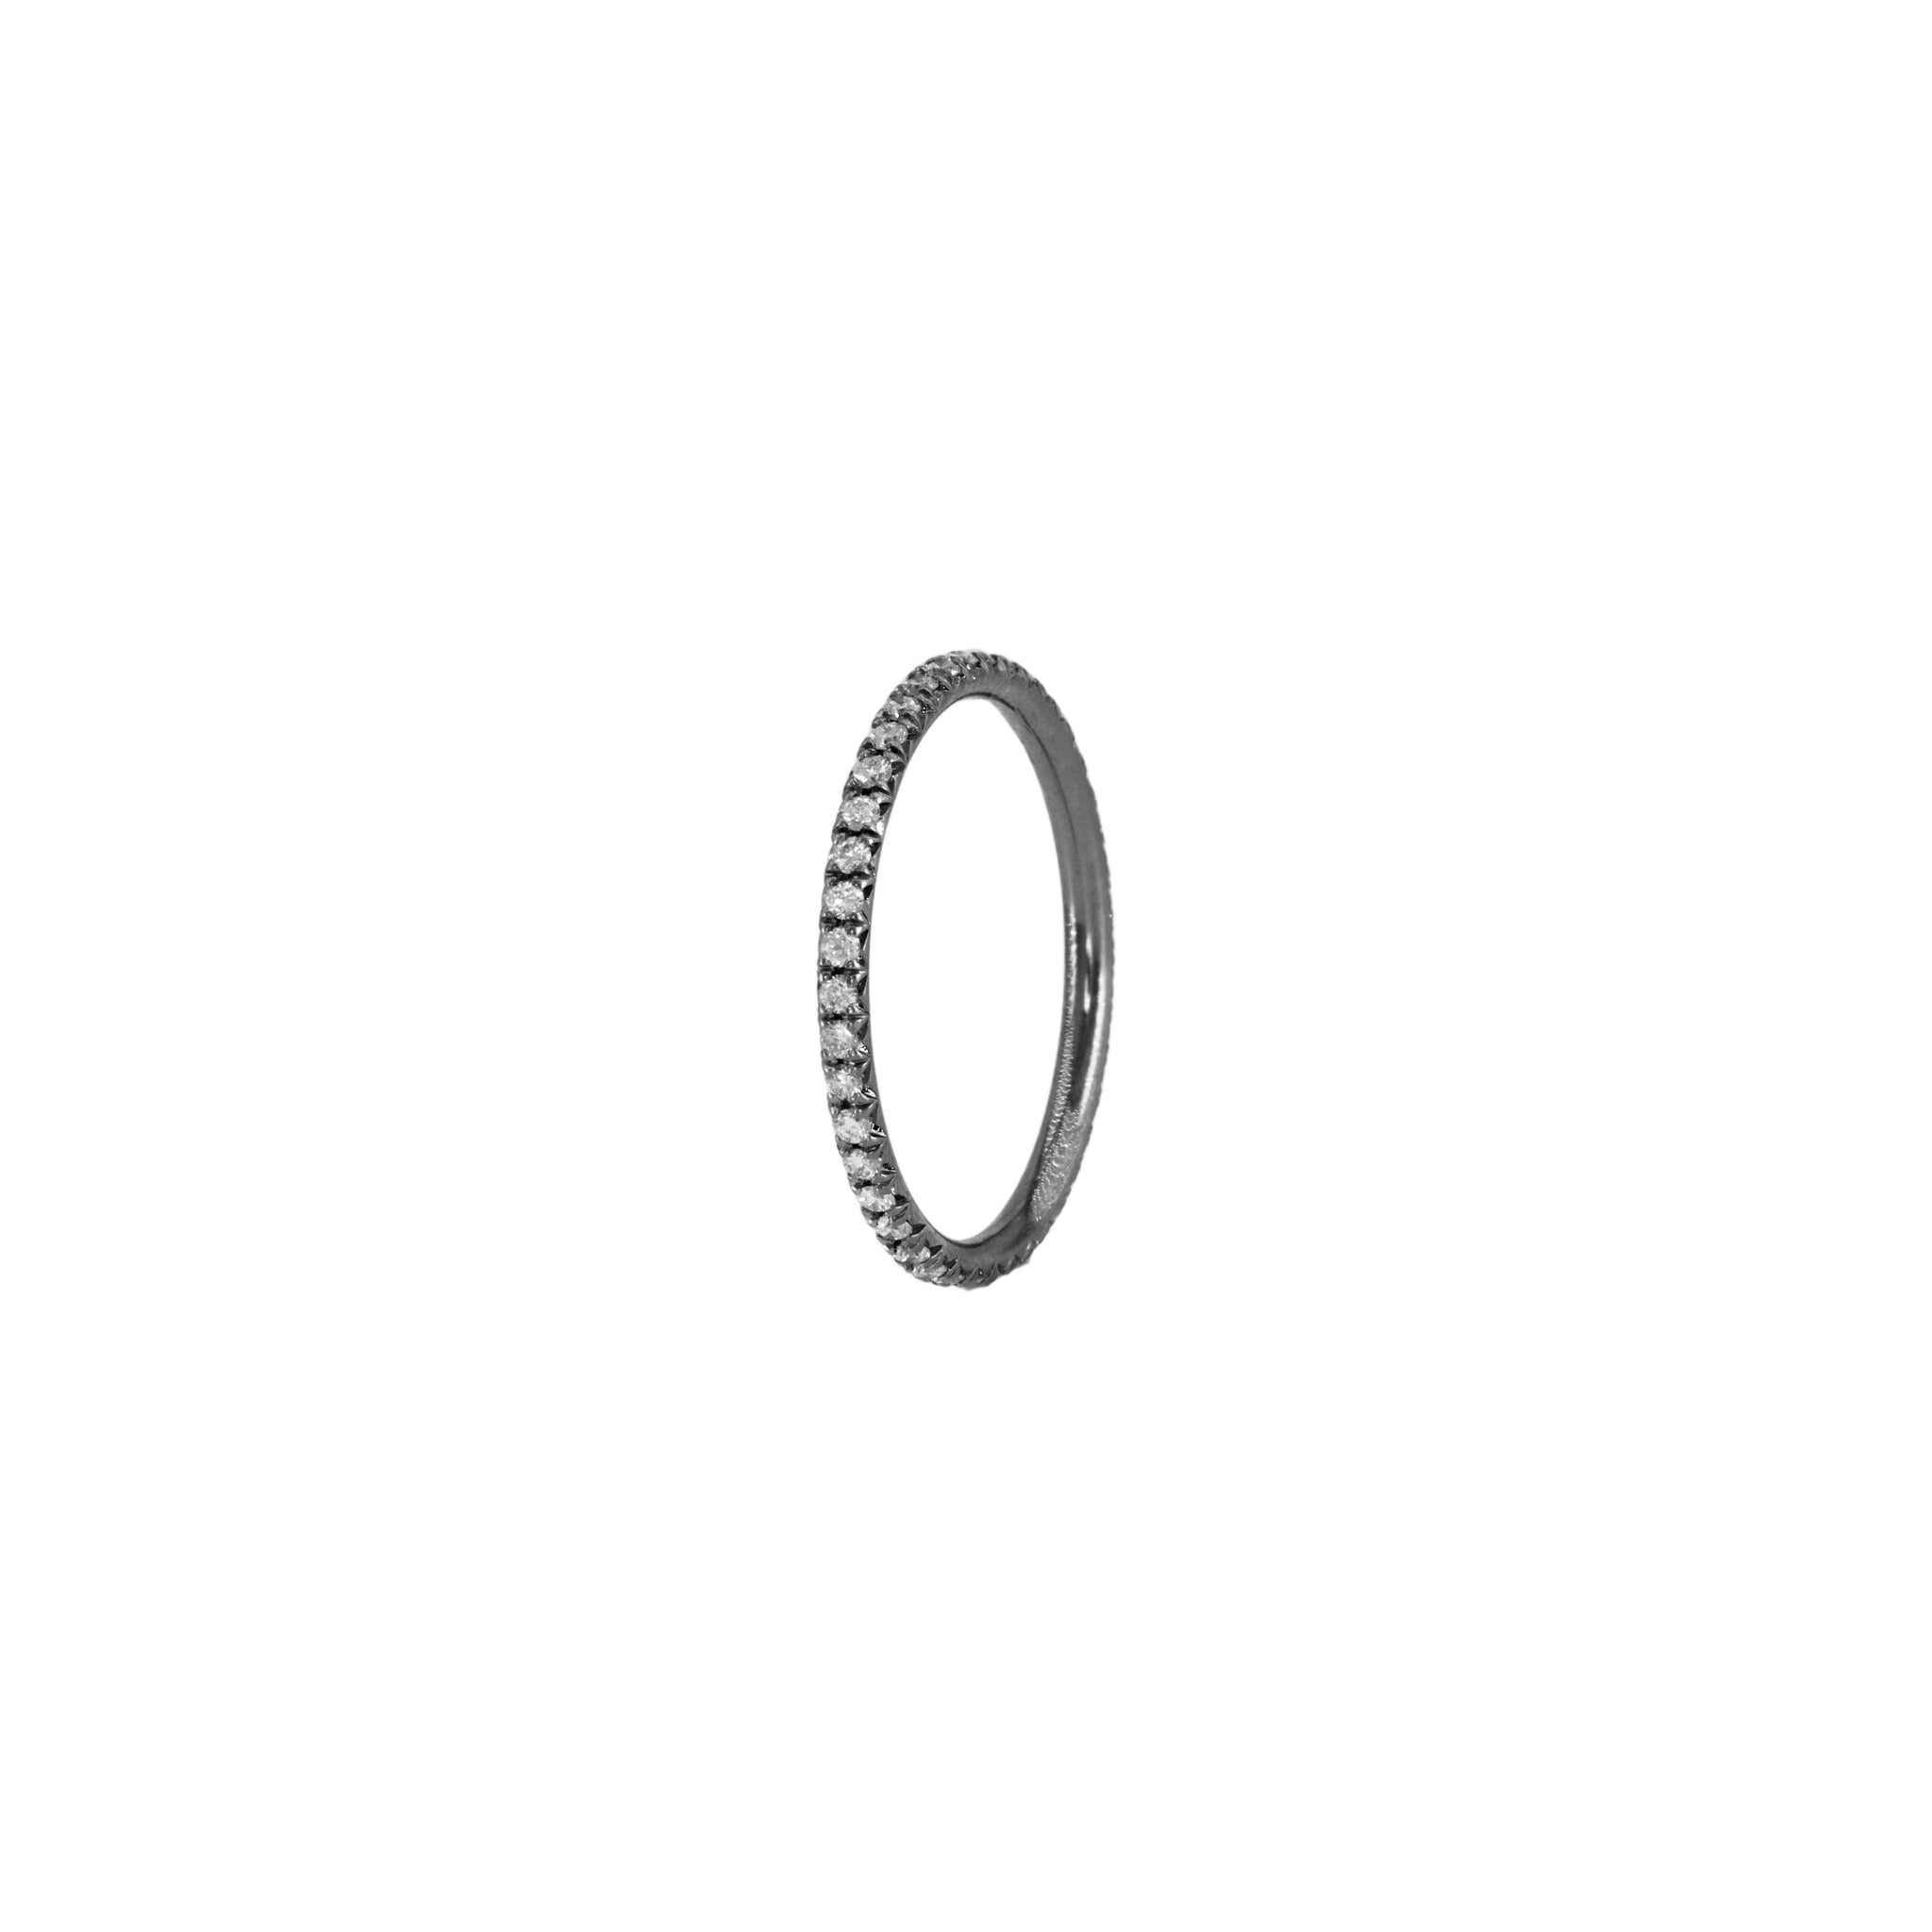 the petite ètoile noir eternity ring